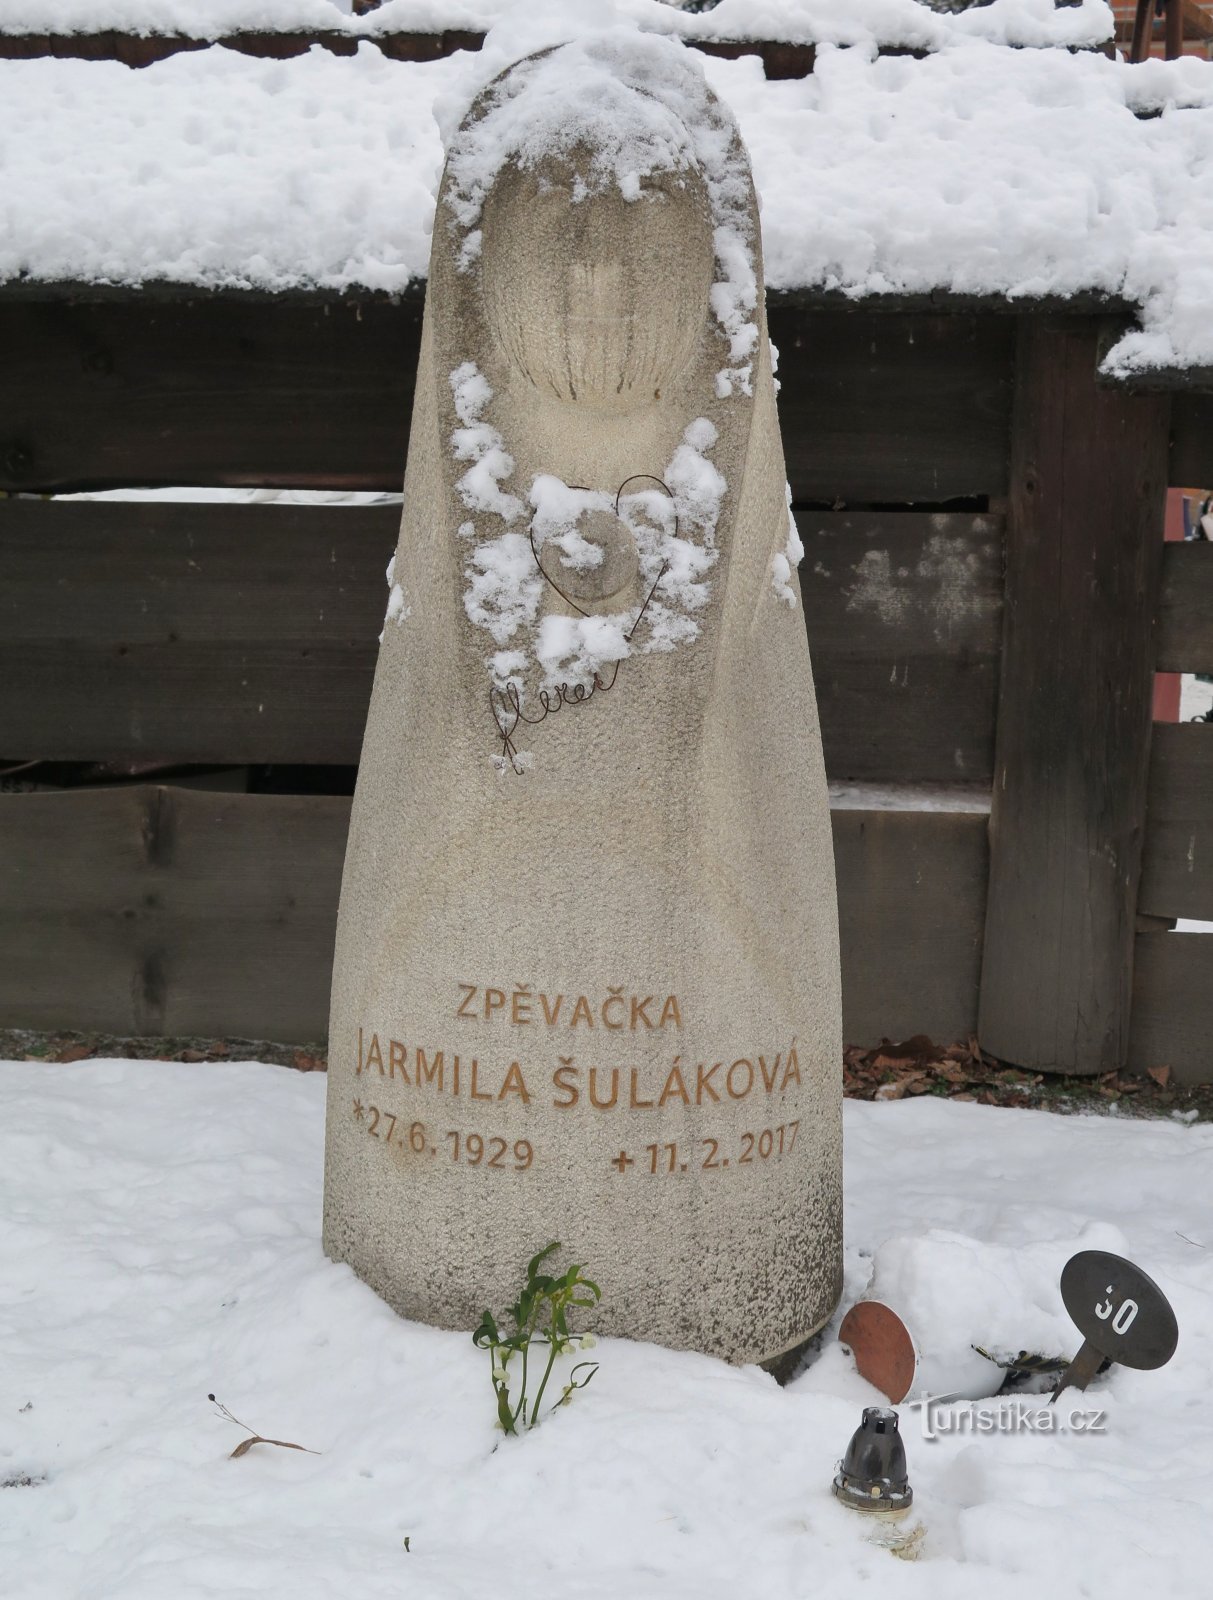 Rožnov pod Radhoštěm - la tomba commemorativa della regina valacca Jarmila Šuláková